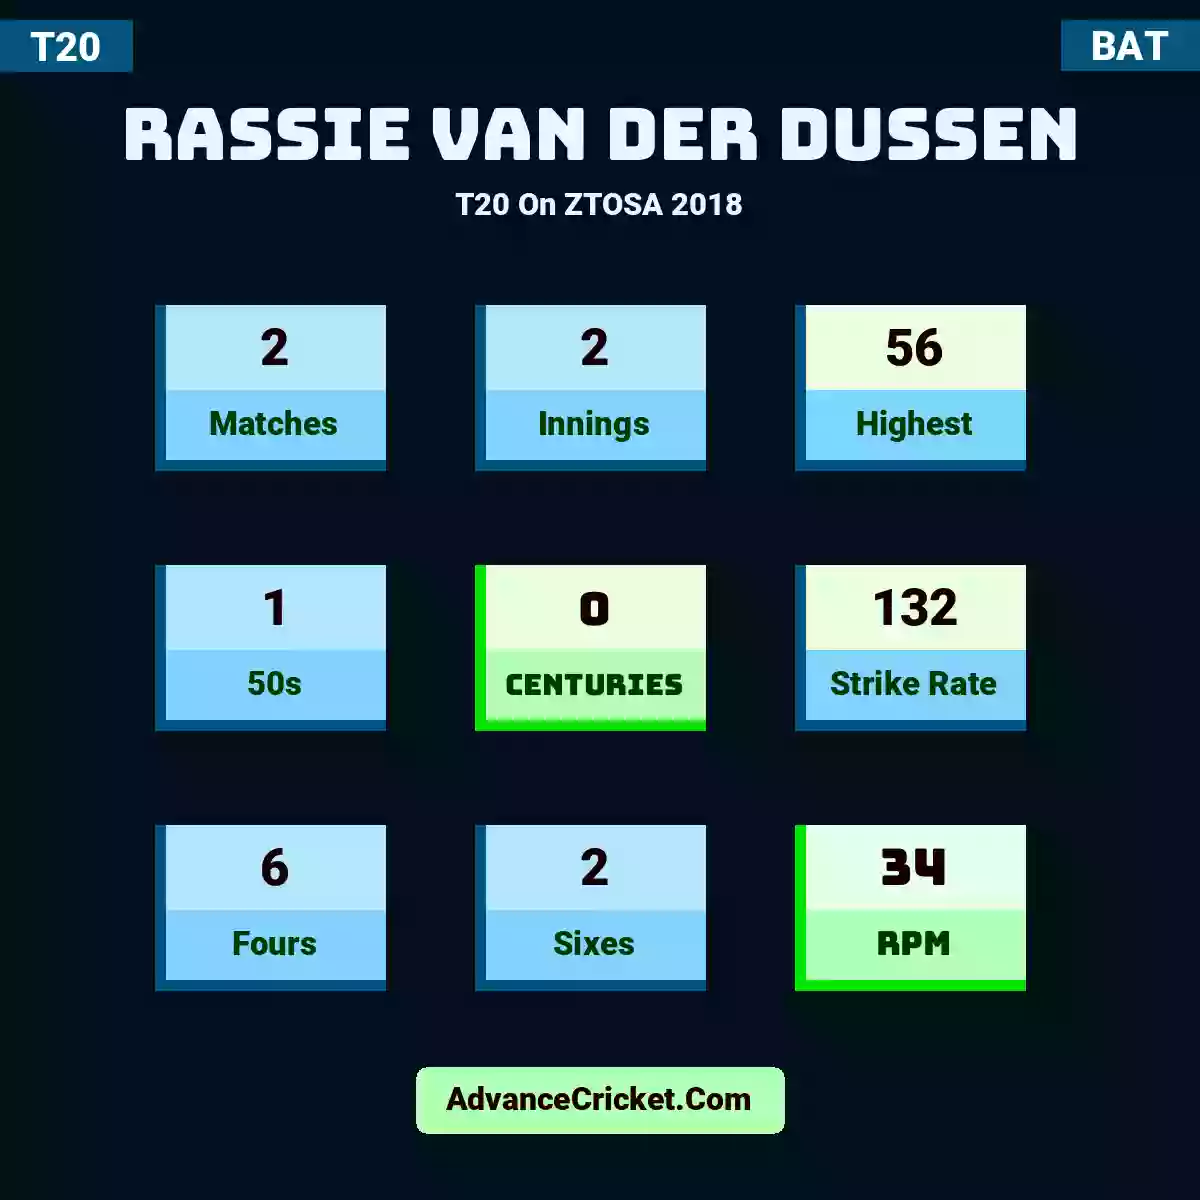 Rassie van der Dussen T20  On ZTOSA 2018, Rassie van der Dussen played 2 matches, scored 56 runs as highest, 1 half-centuries, and 0 centuries, with a strike rate of 132. R.Dussen hit 6 fours and 2 sixes, with an RPM of 34.